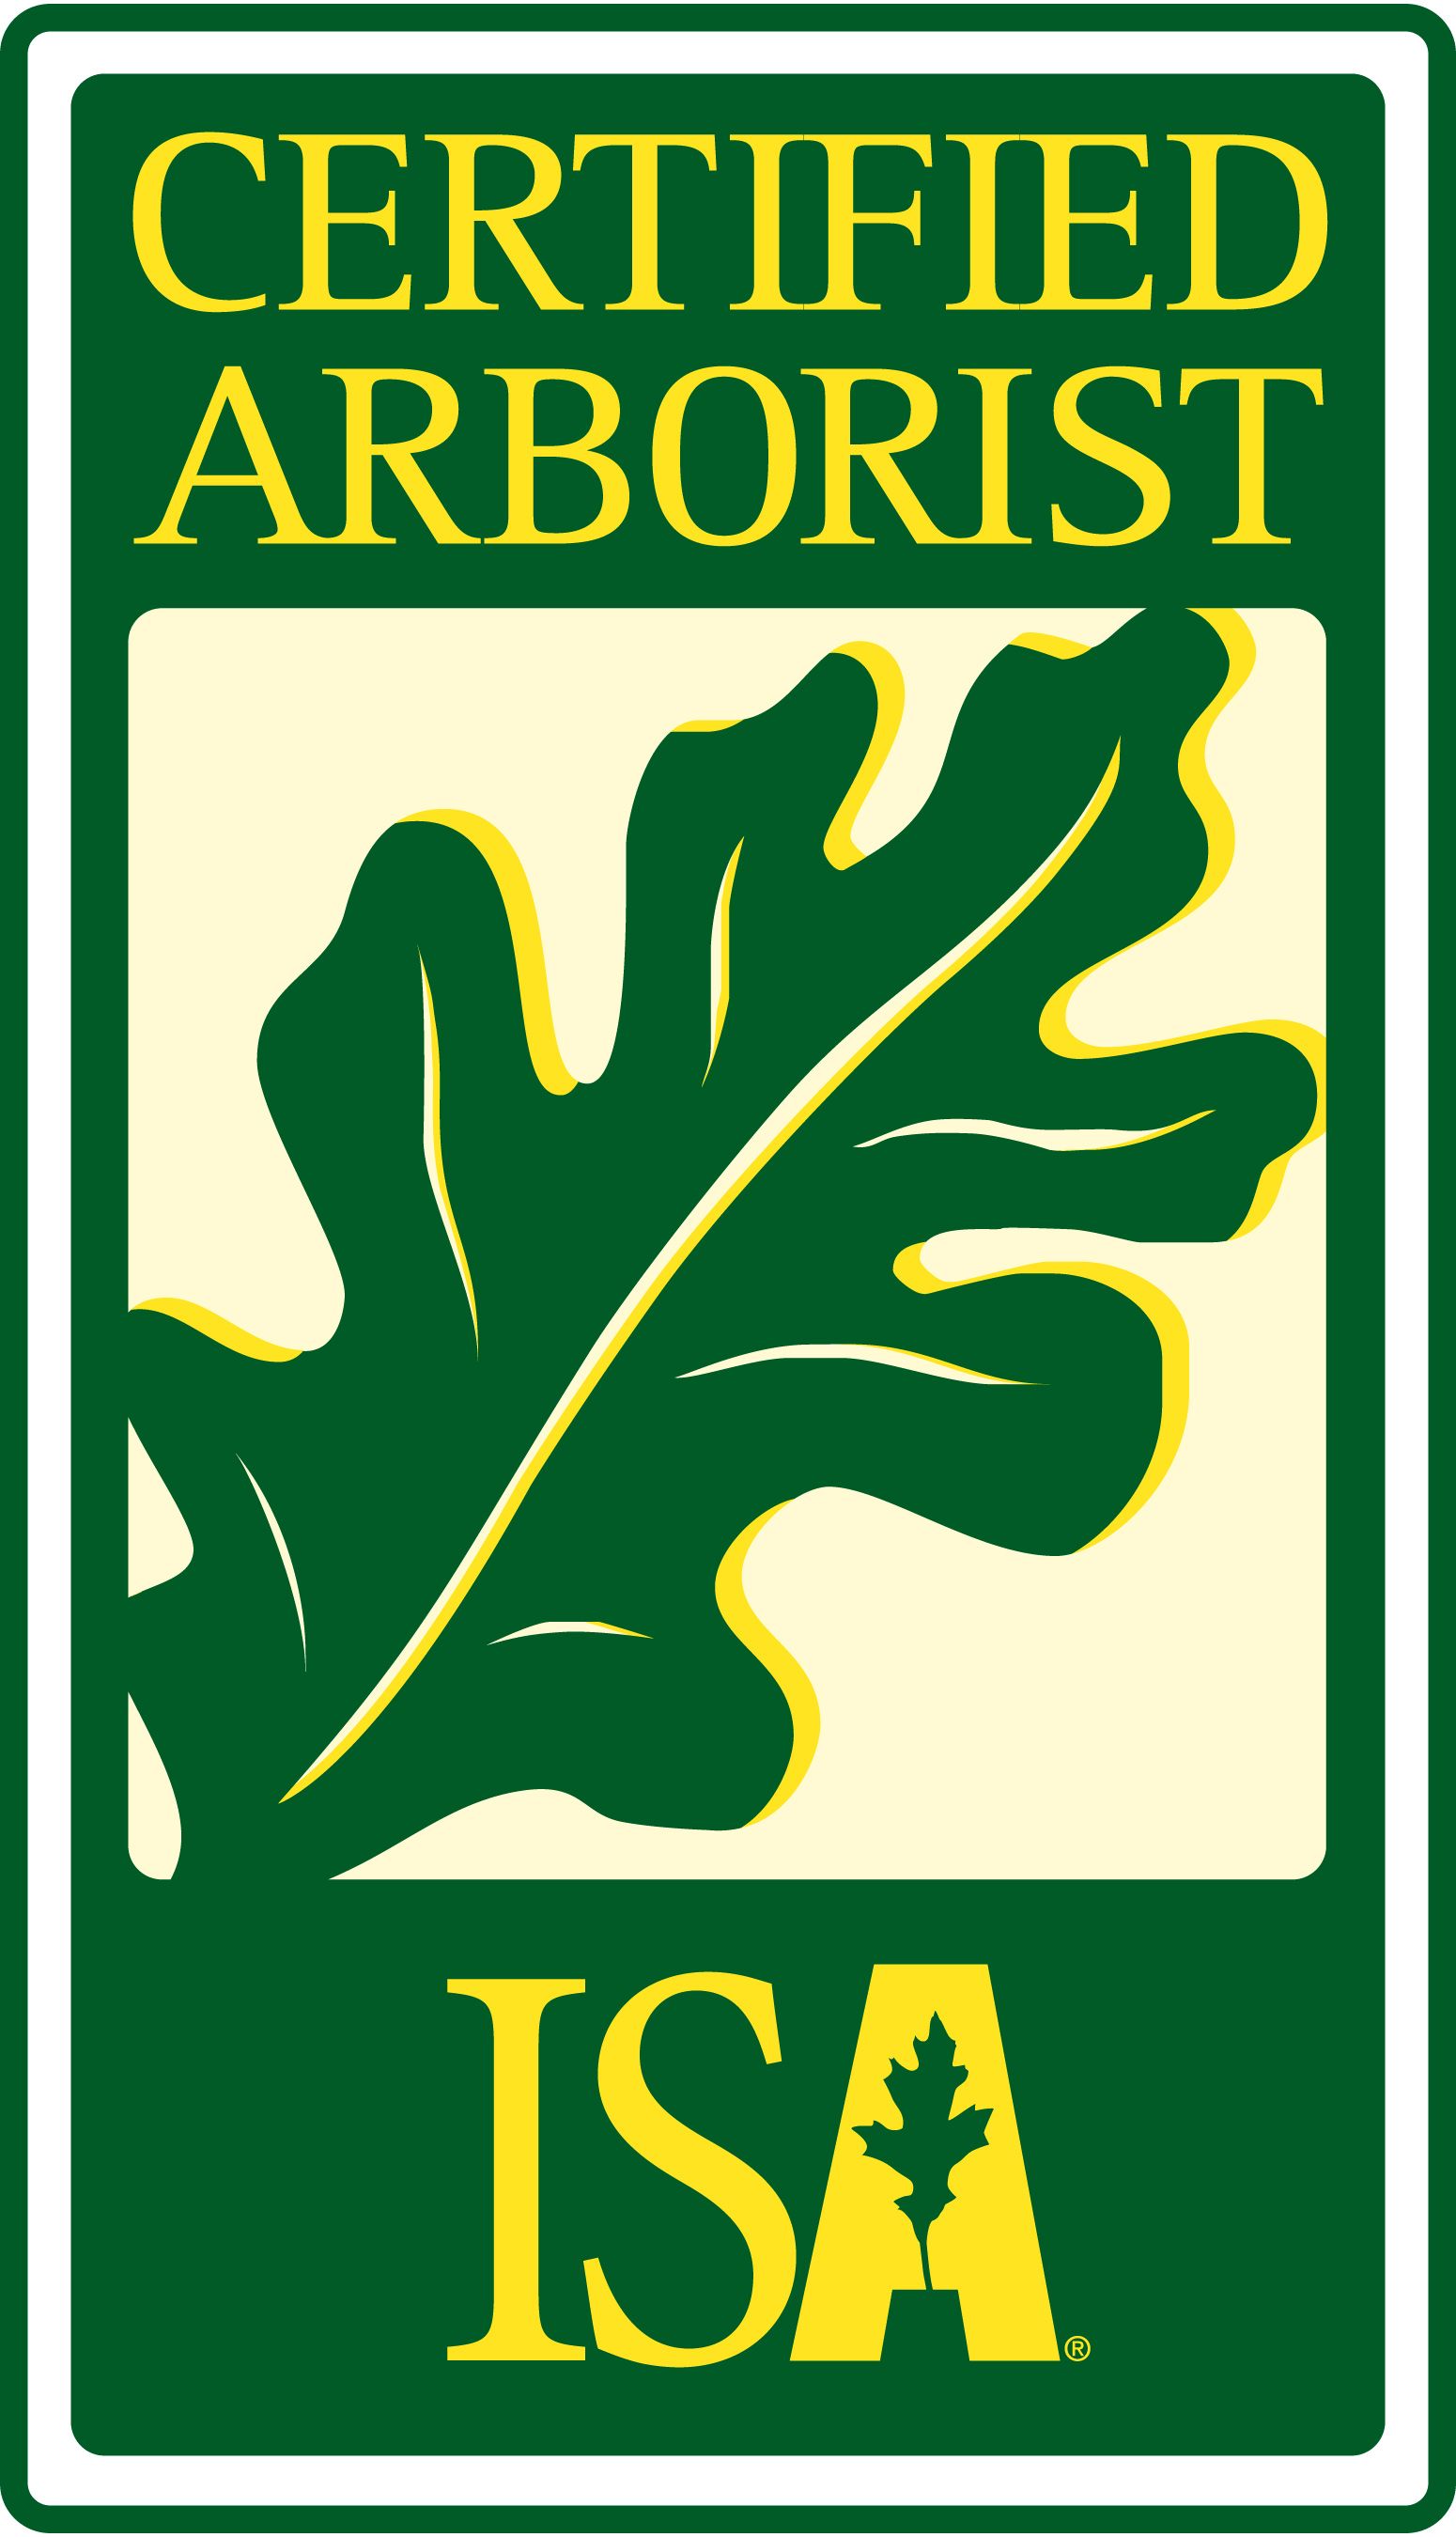 International Society of Arboriculture 